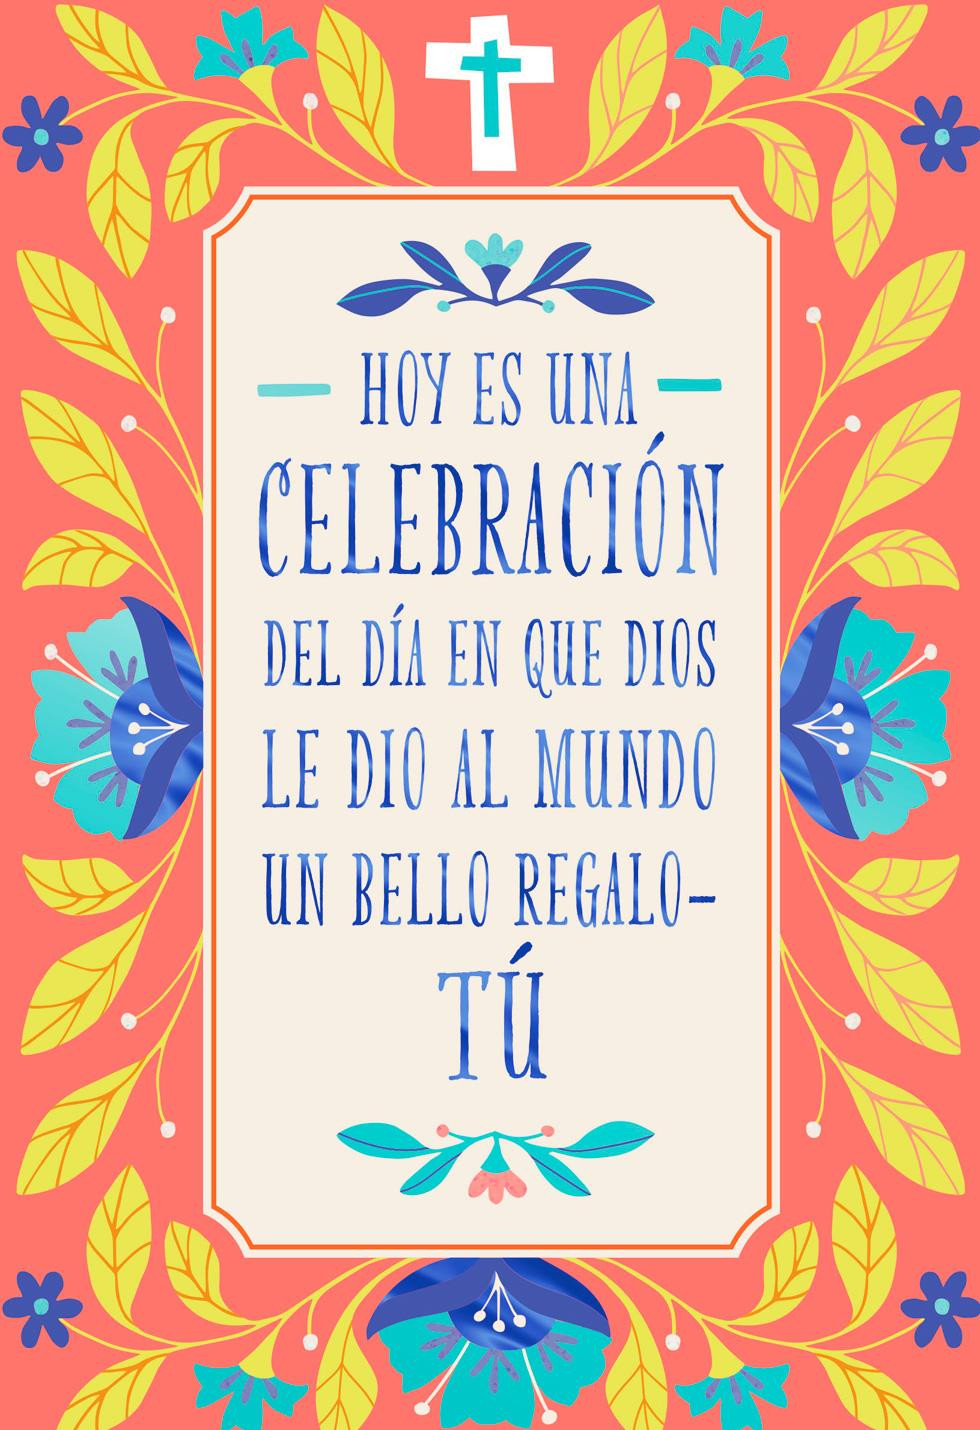 Birthday Cards In Spanish
 A Wonderful Woman Spanish Language Religious Birthday Card